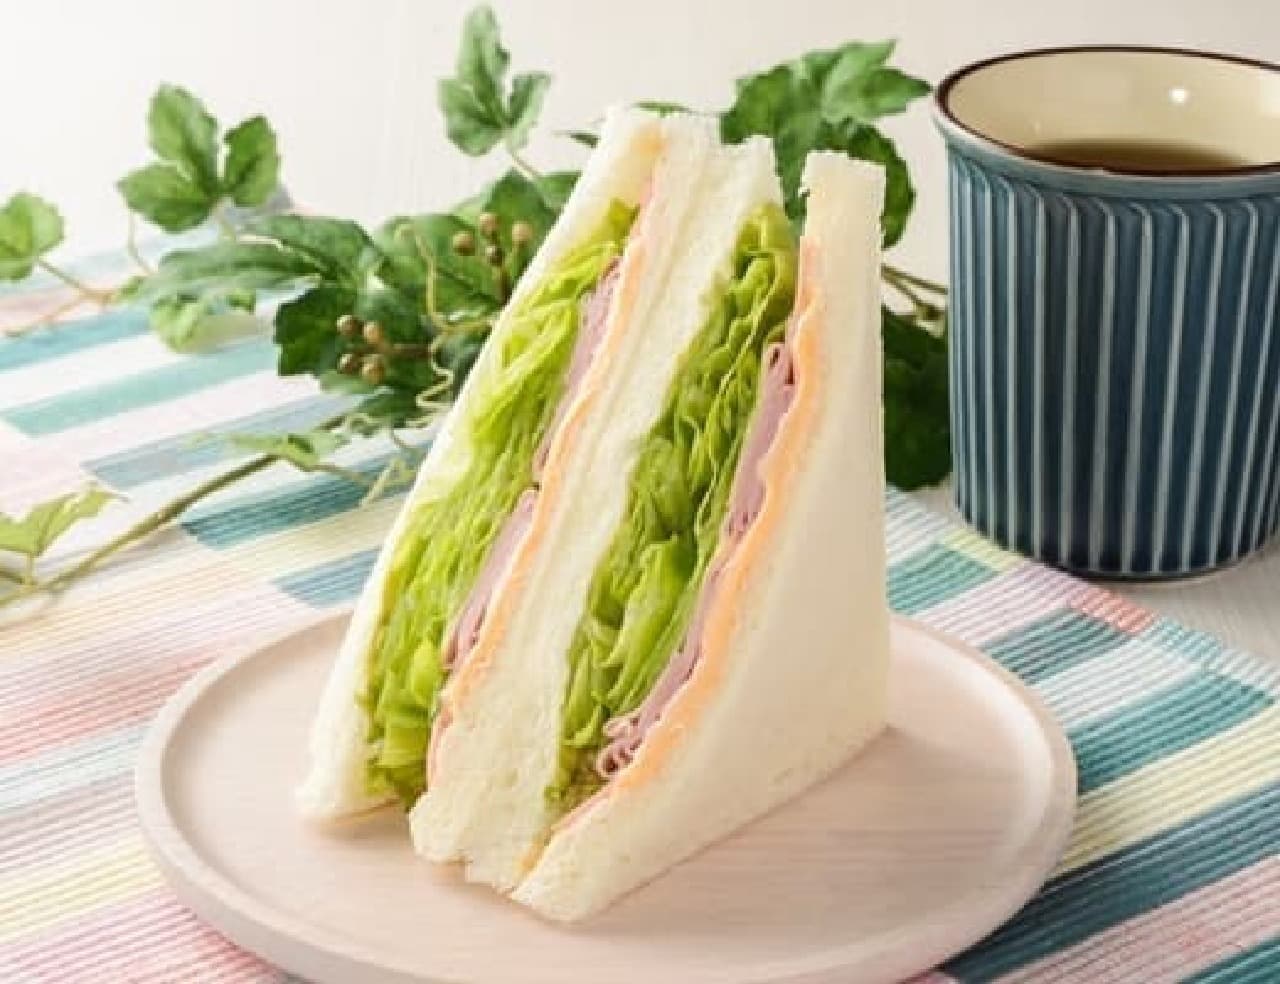 Lawson "Crispy Lettuce Sandwich"